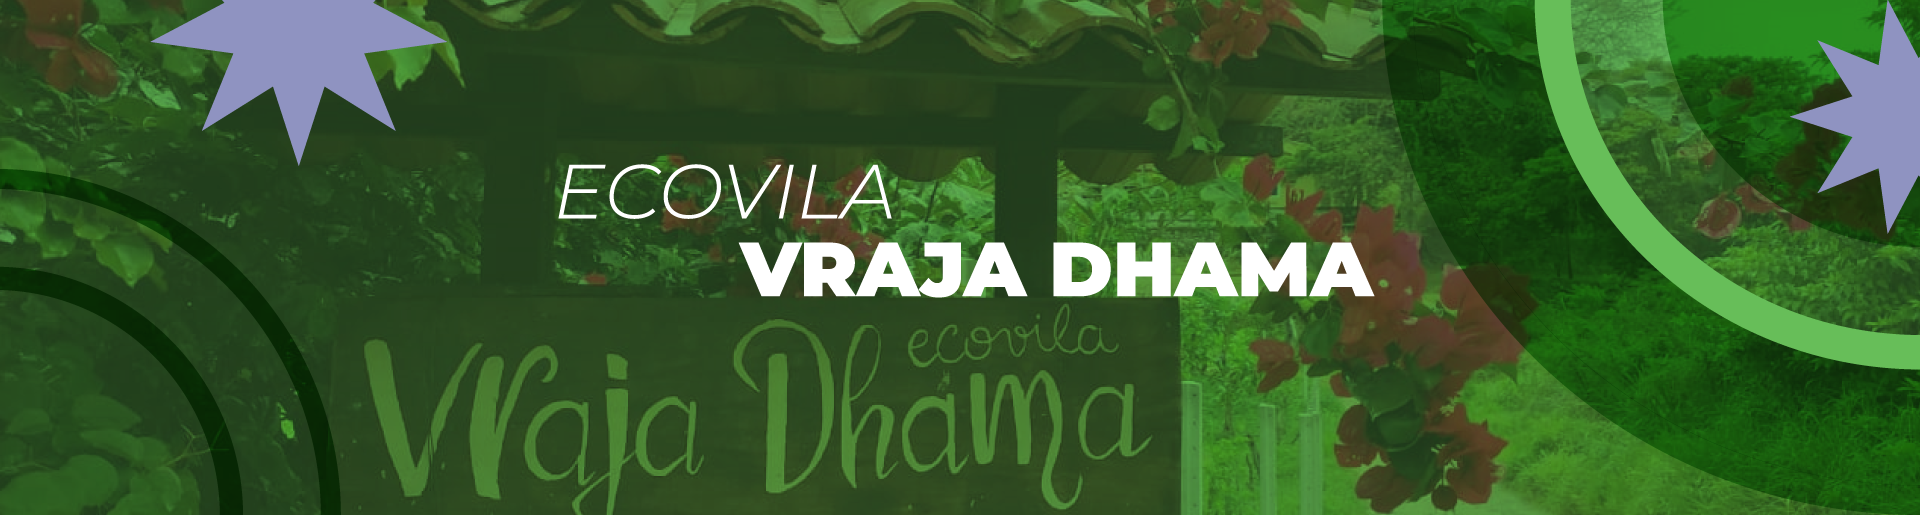 Ecovila Vraja Dhama added a new - Ecovila Vraja Dhama